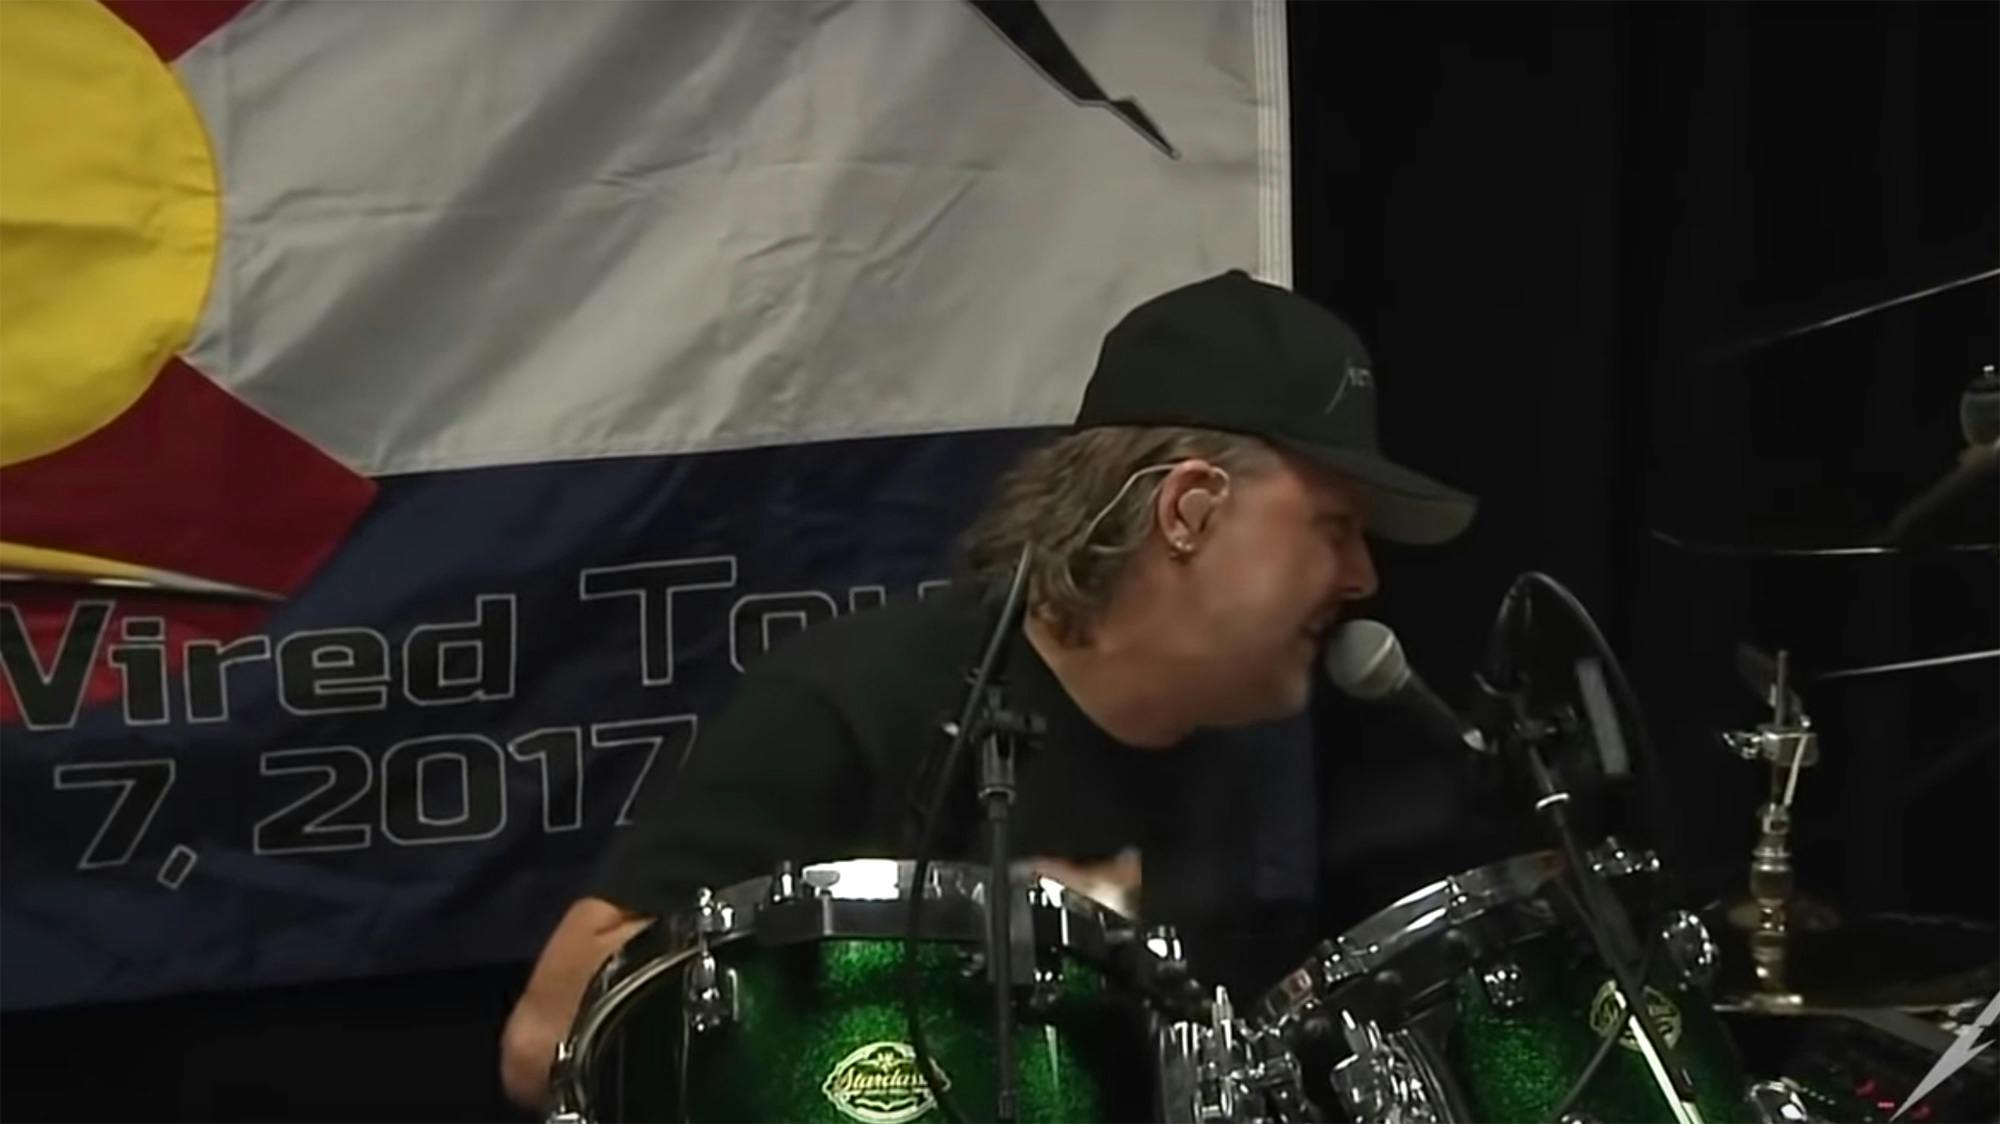 Watch Metallica Cover Judas Priest With Lars Ulrich On Vocals